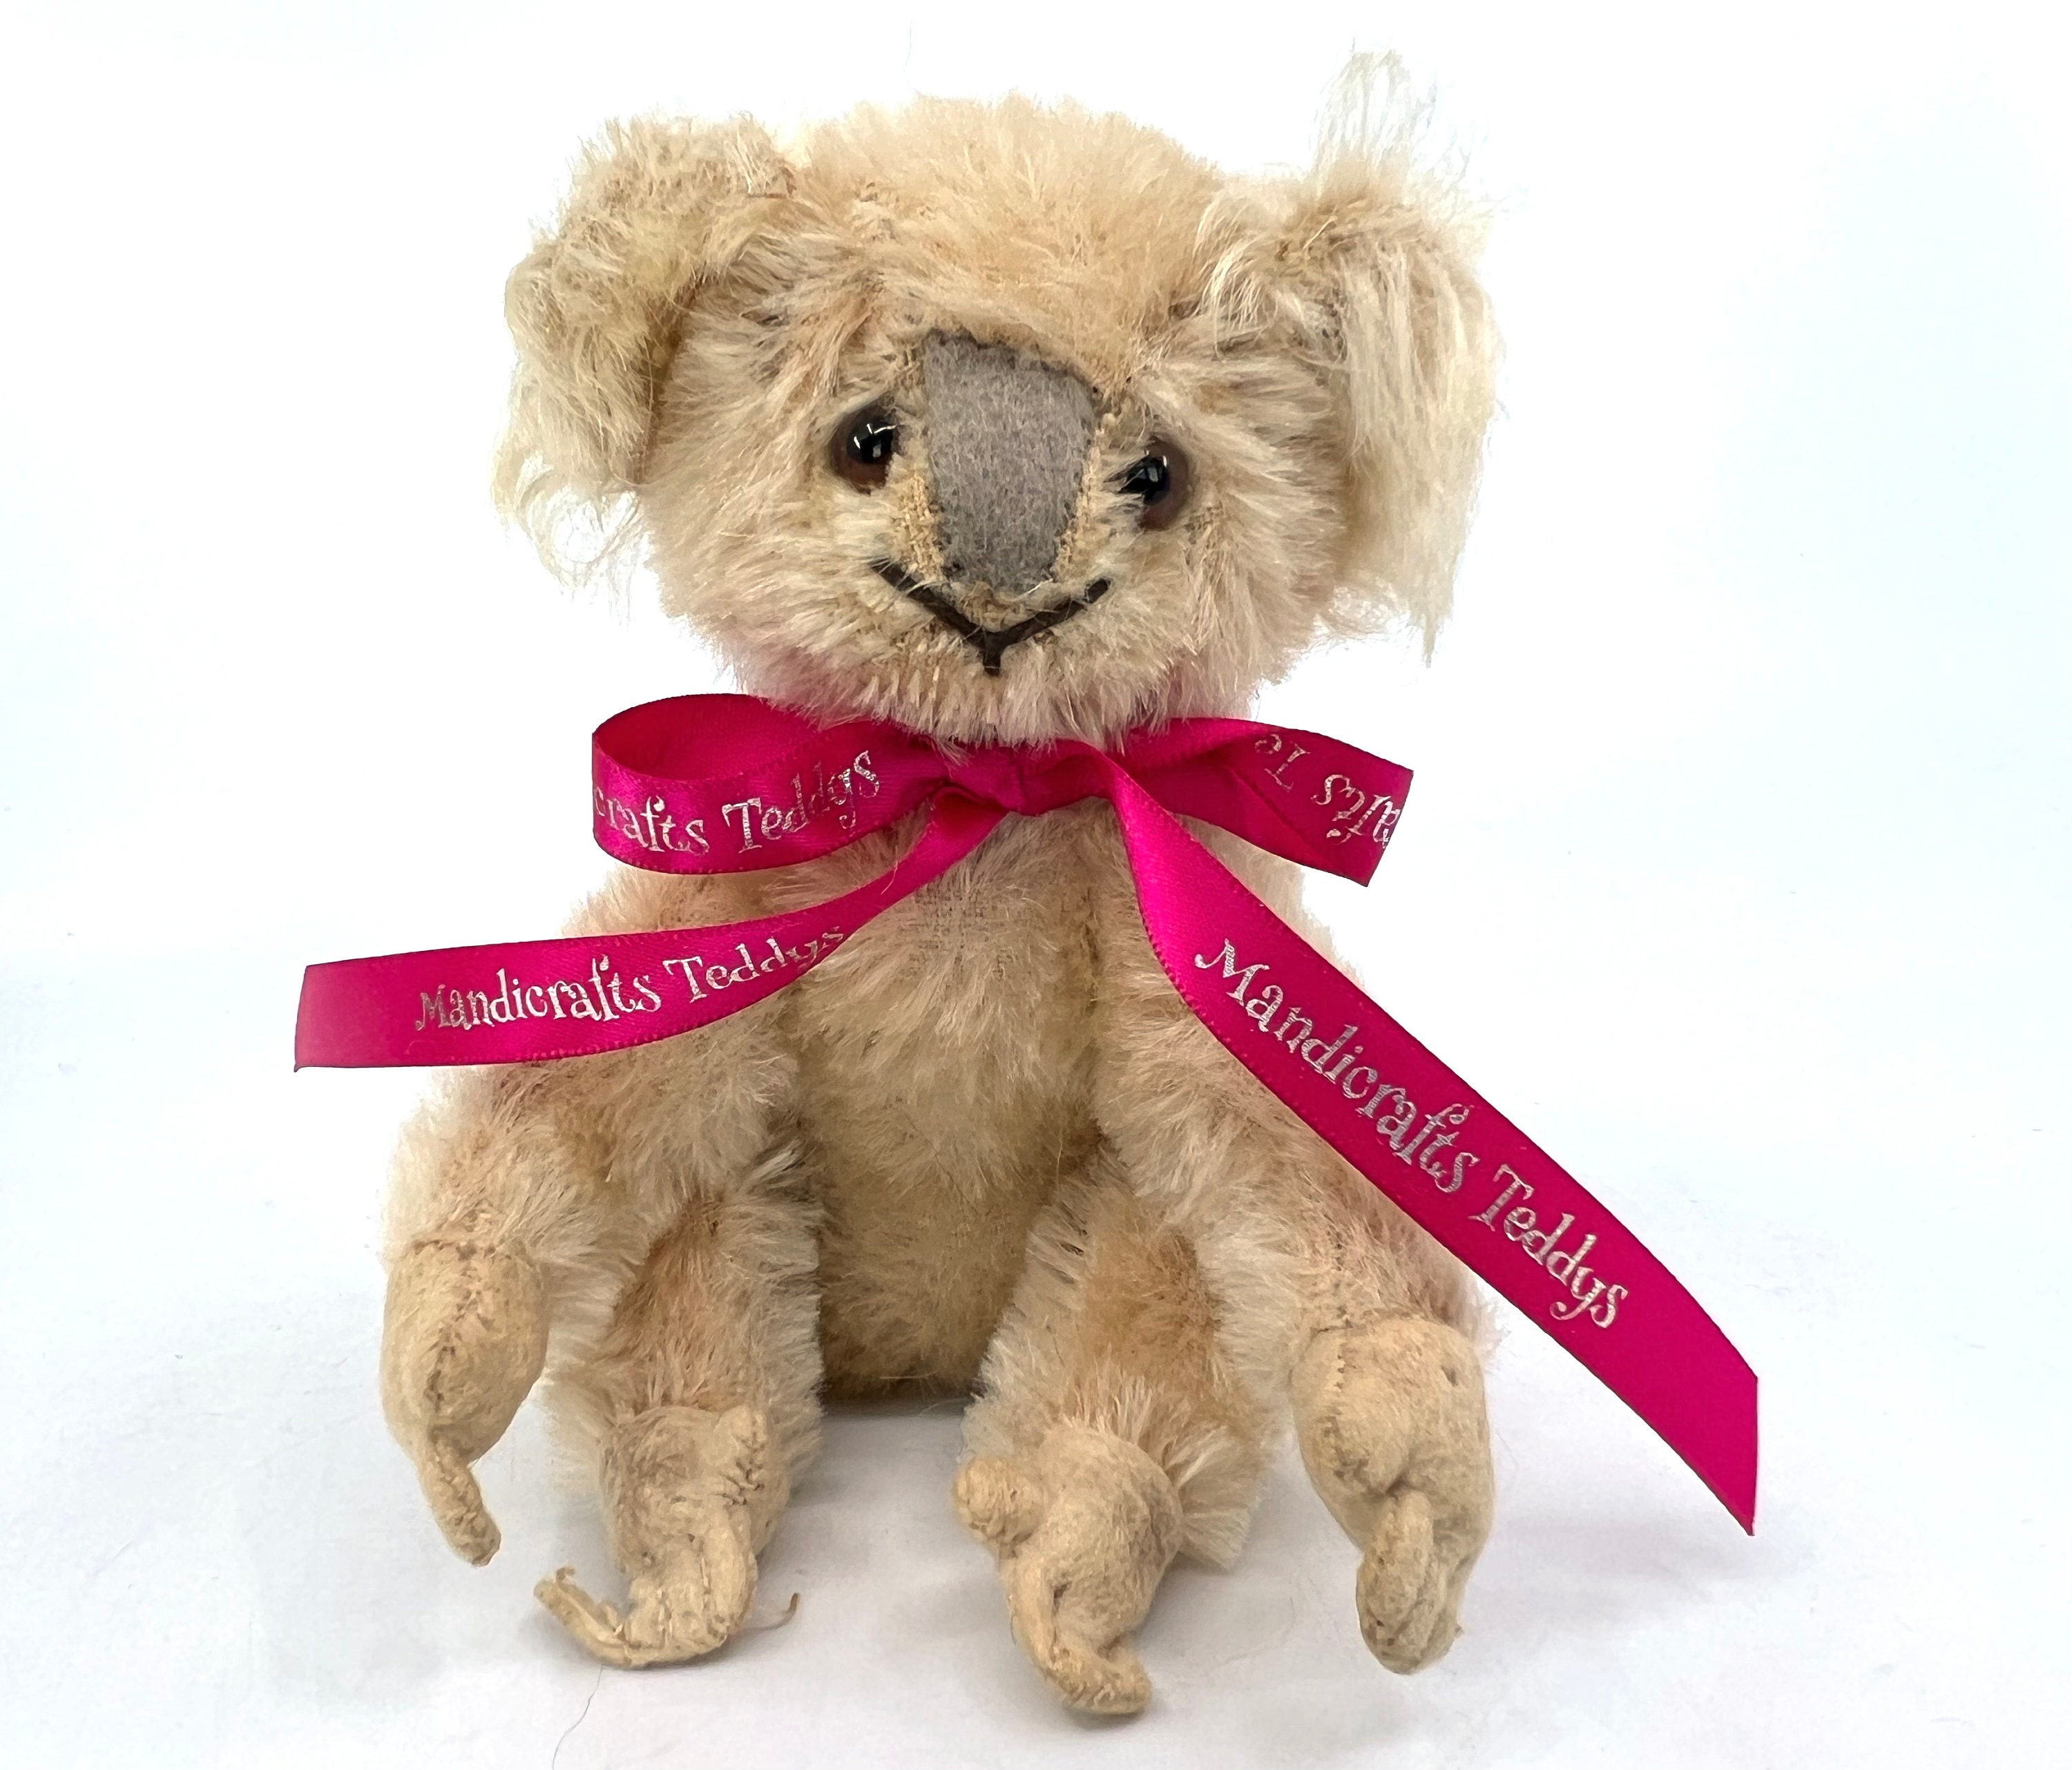 Mandicrafts News & Views - Teddy Bears & Collectibles: Antique